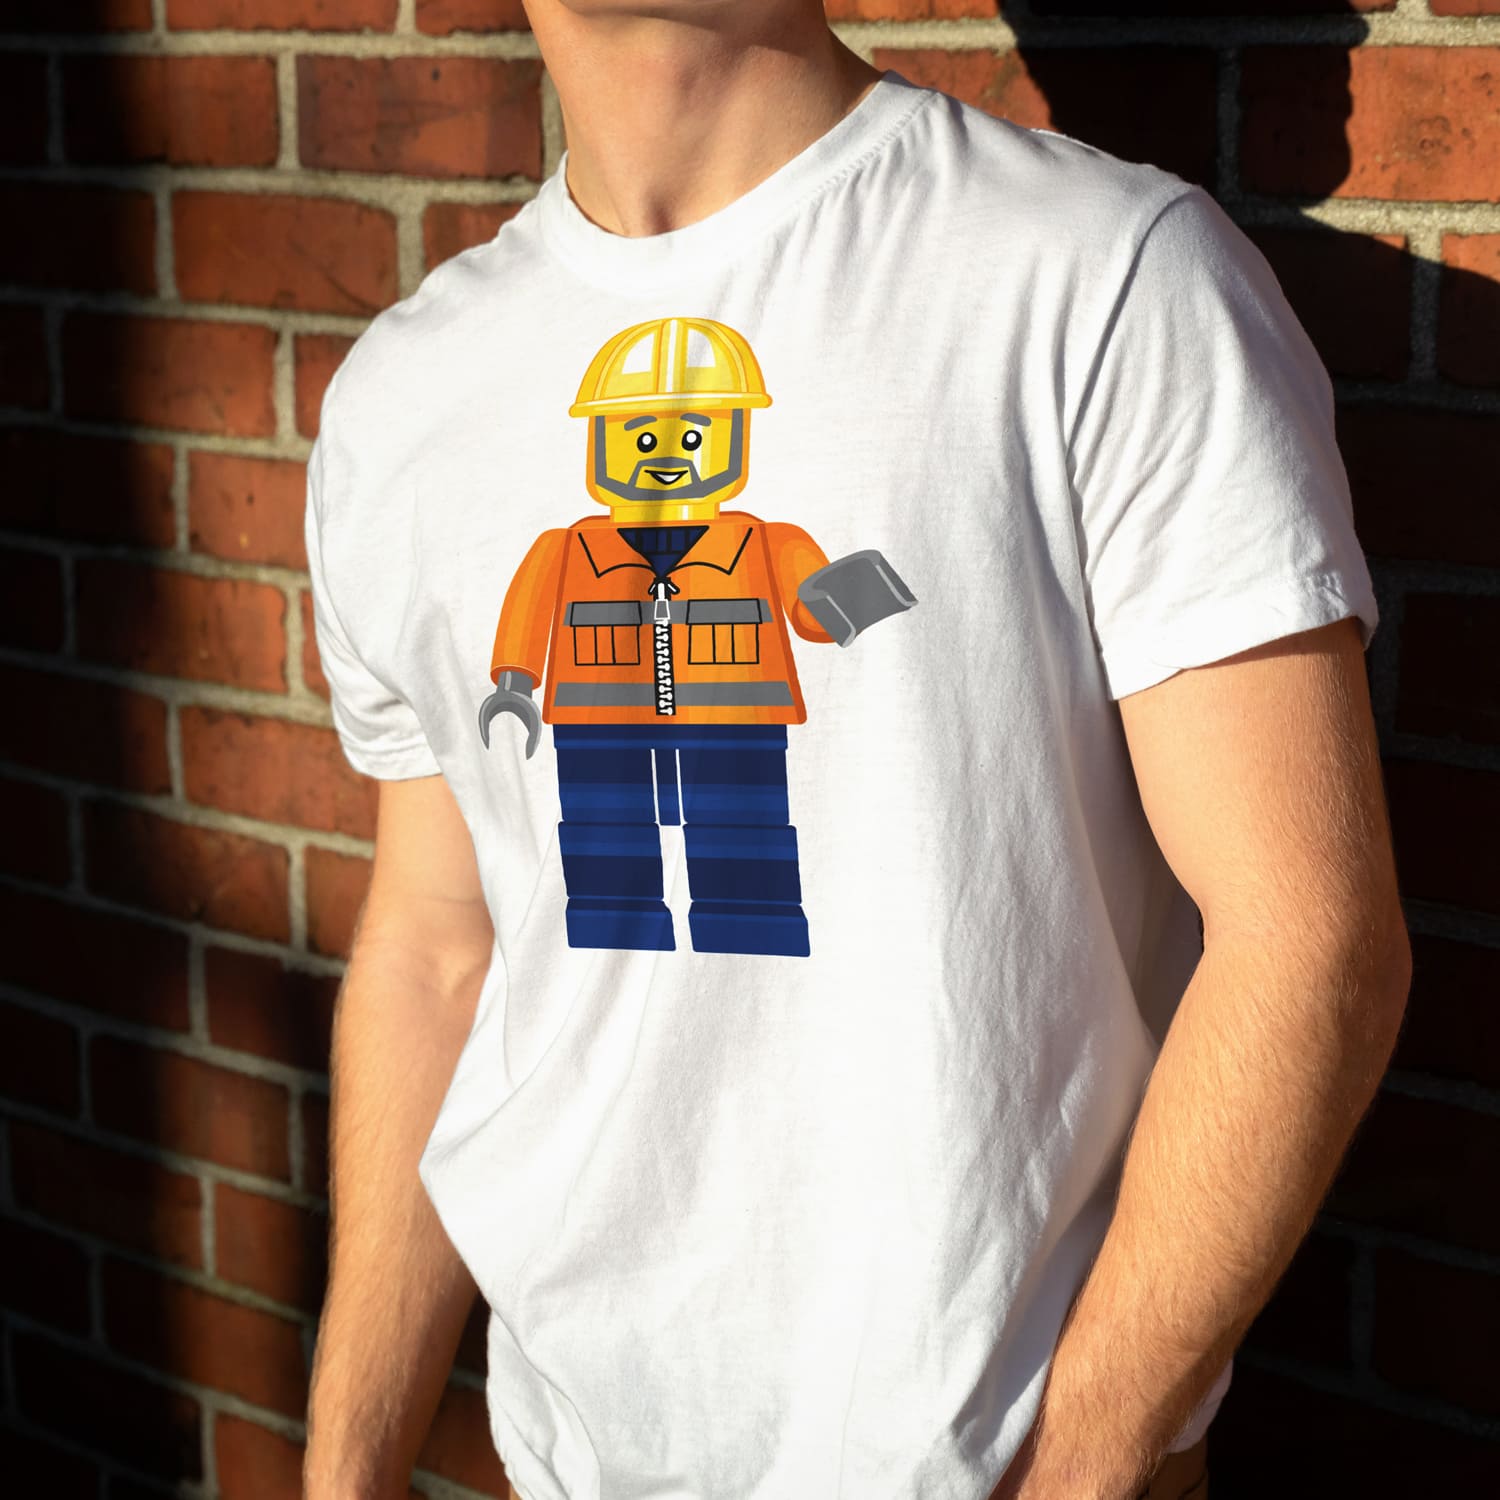 Lego man svg design on the t-shirt.